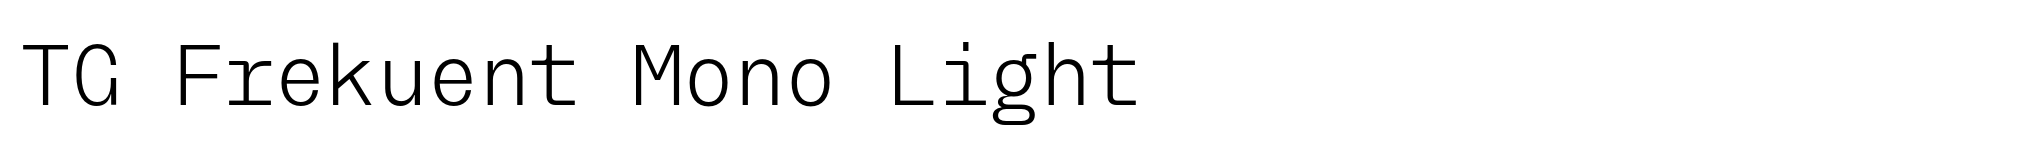 TG Frekuent Mono Light image